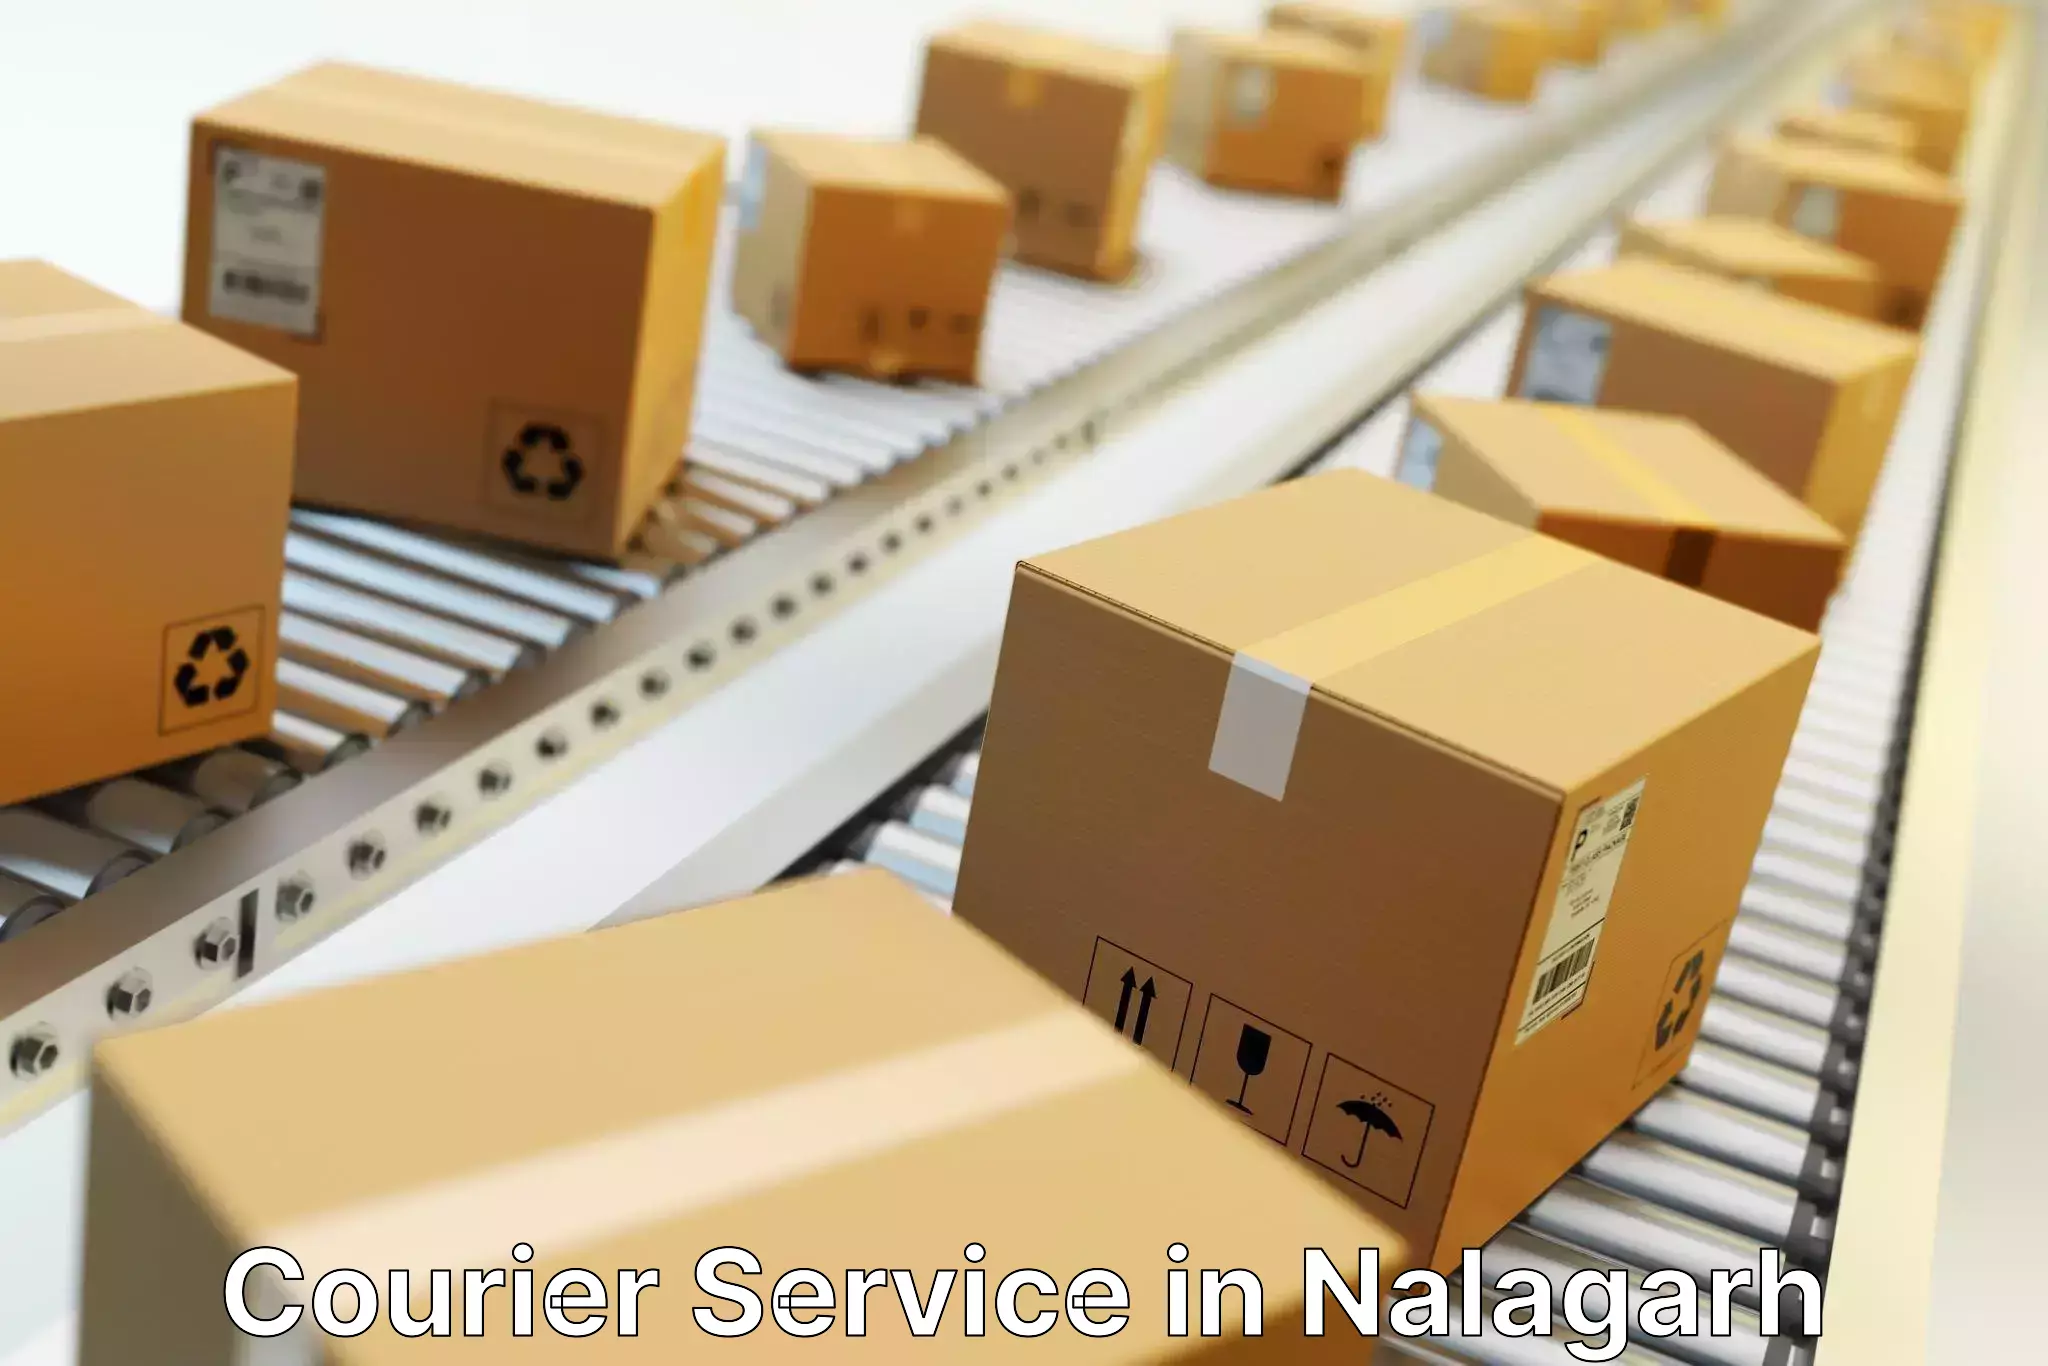 Efficient parcel service in Nalagarh